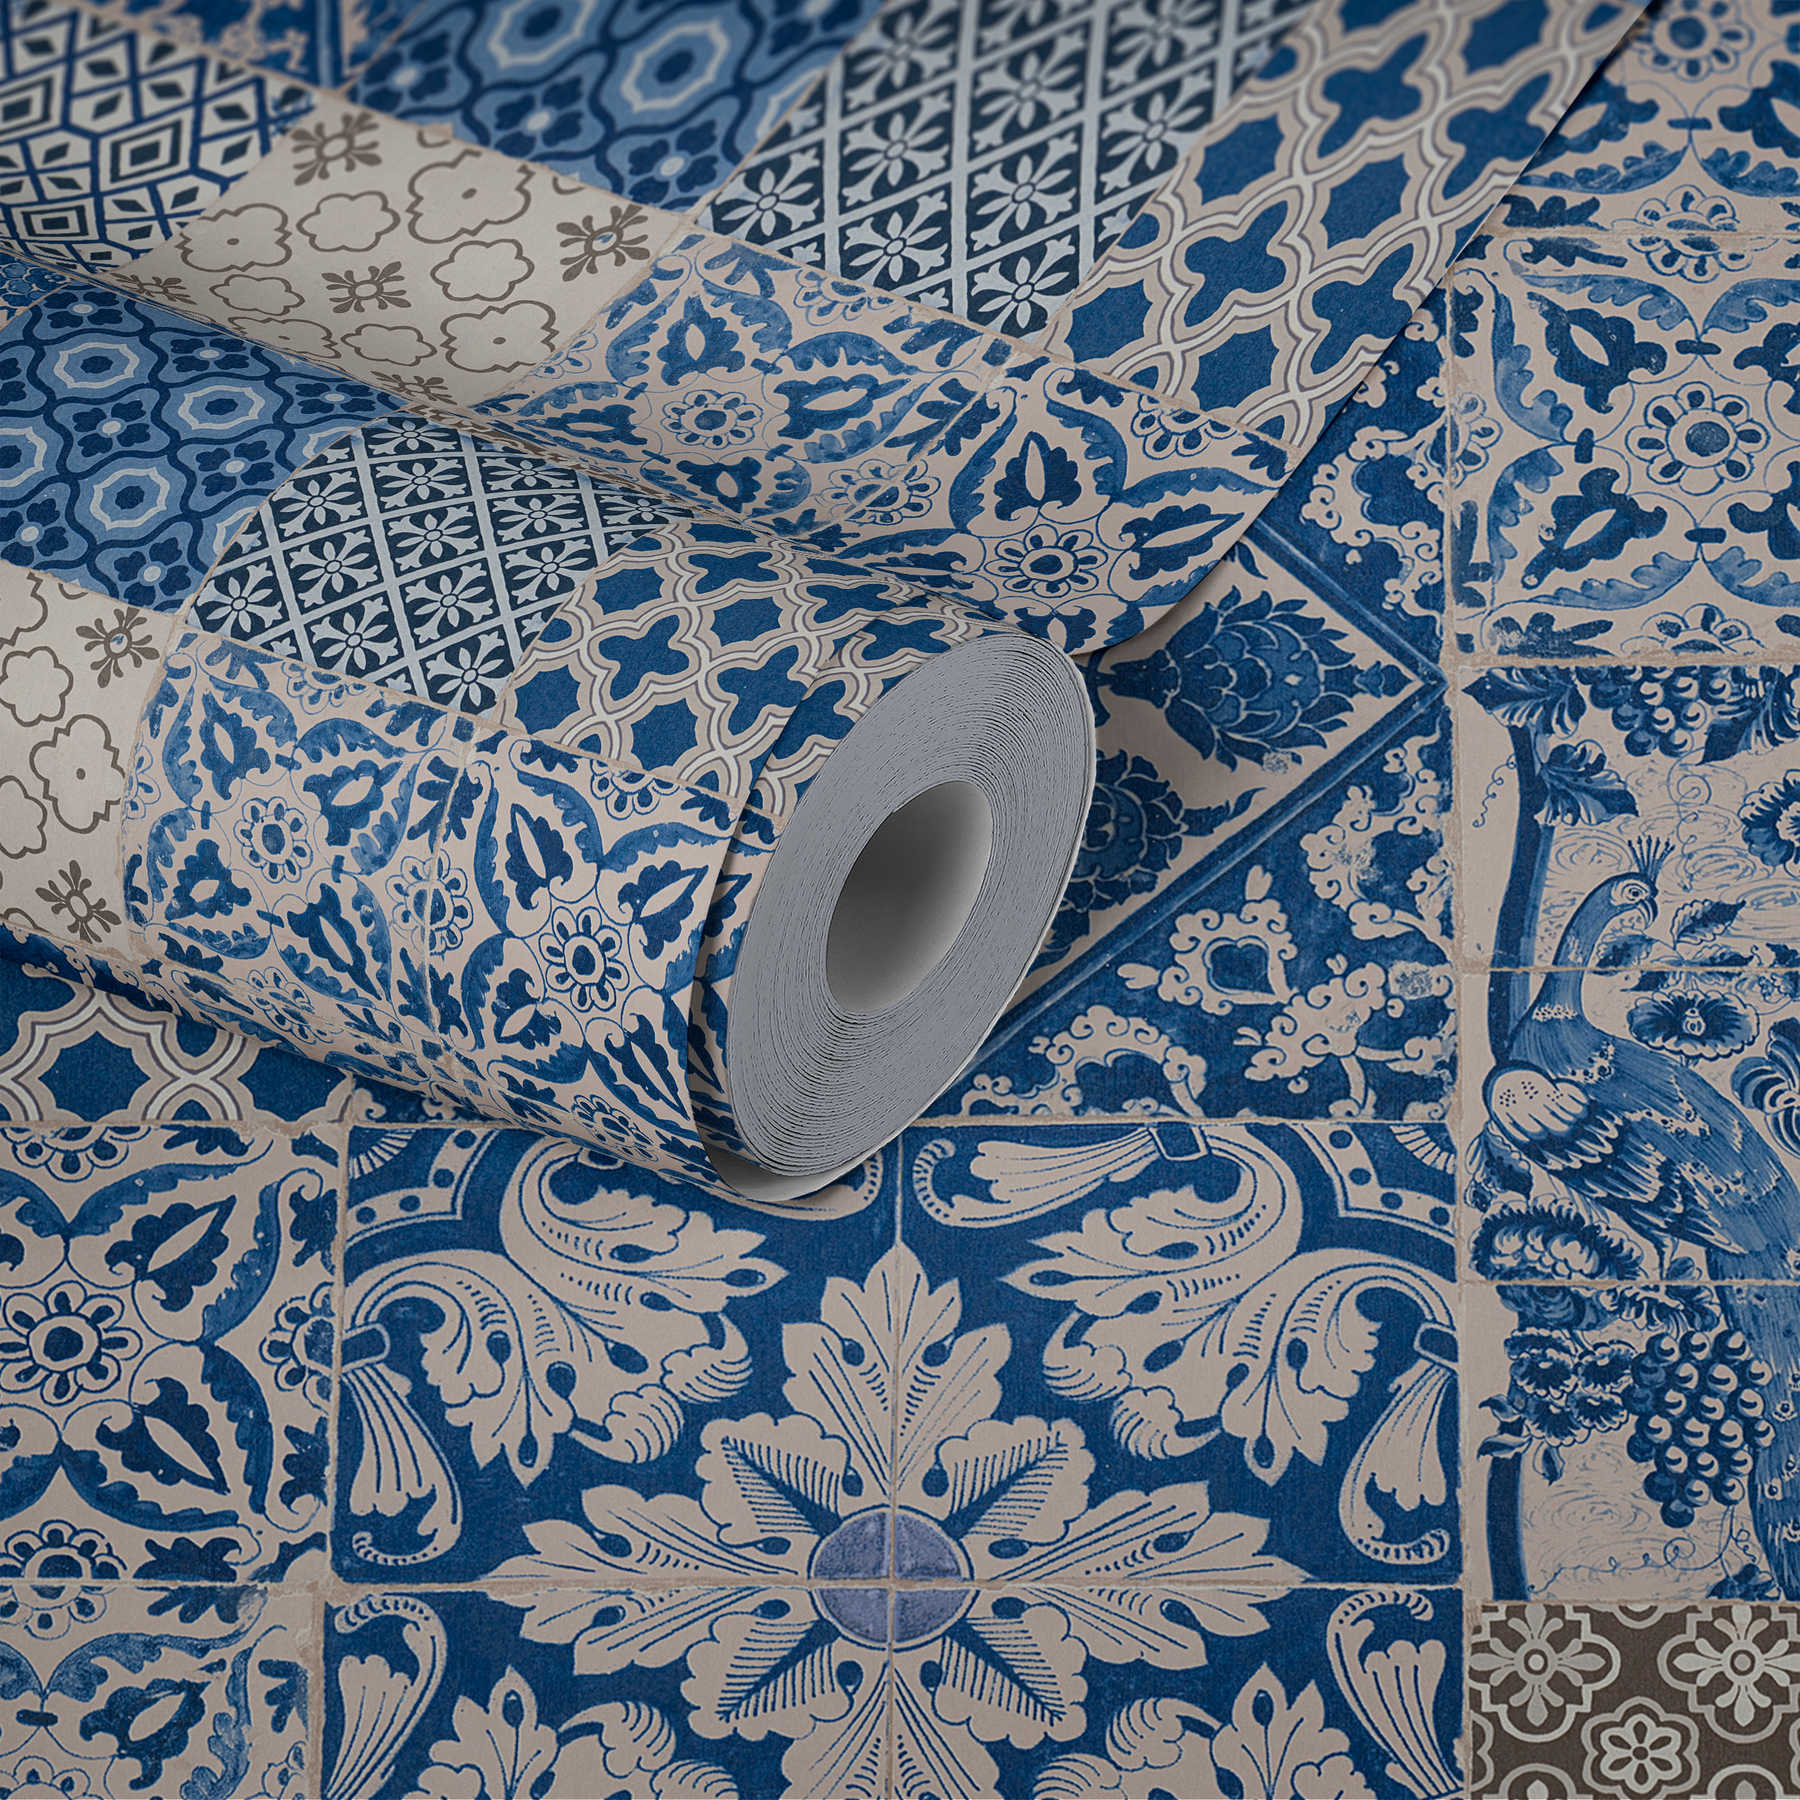             Tile & mosaic design wallpaper - blue, cream, purple
        